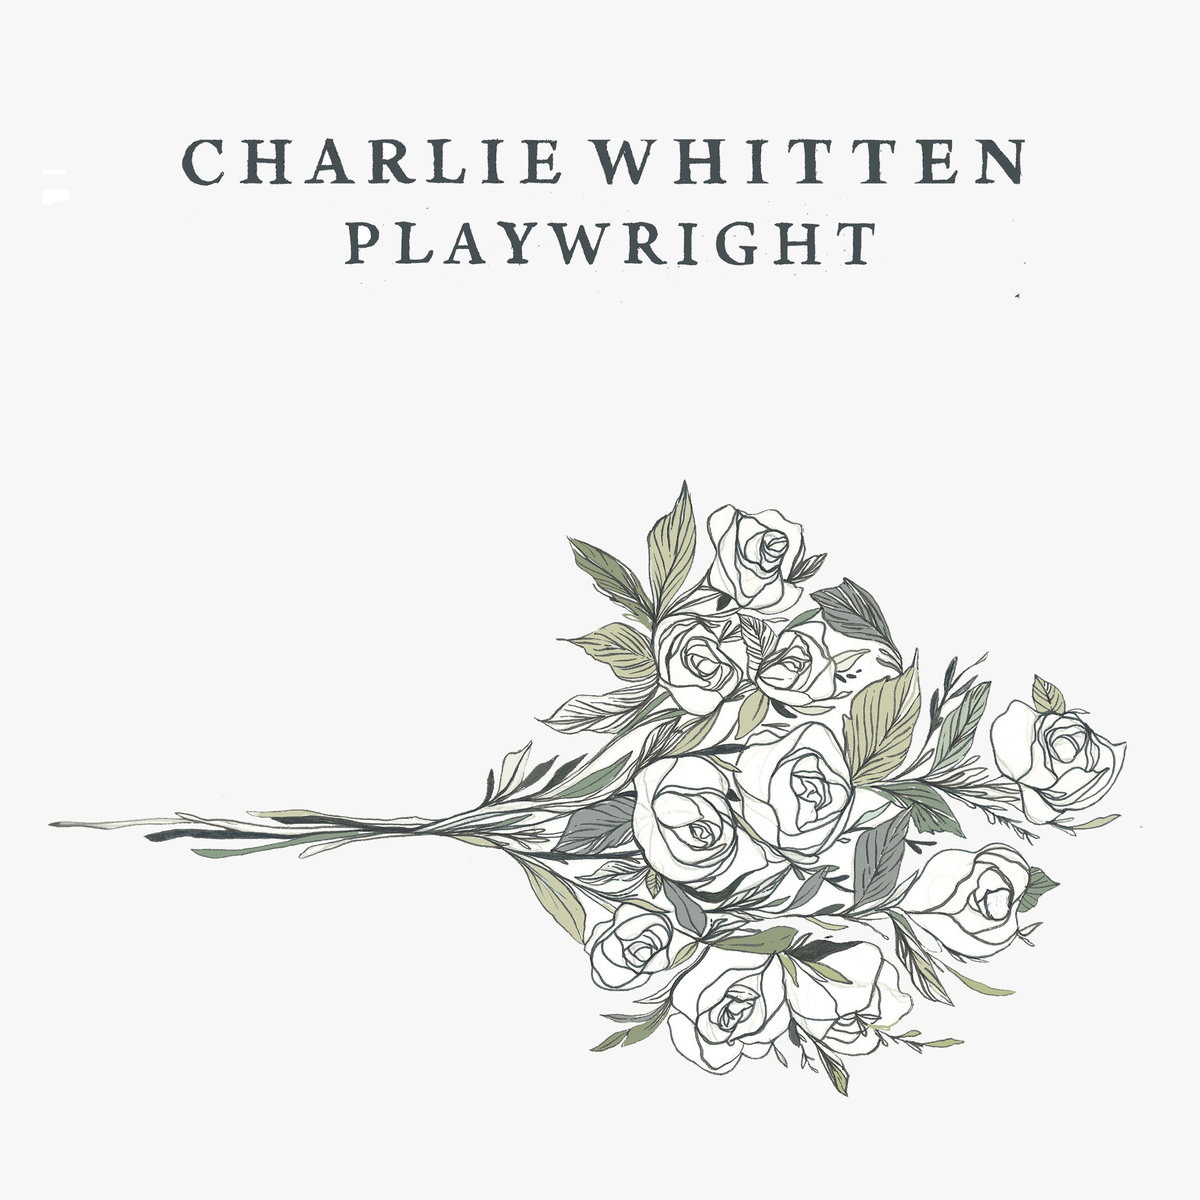 Playwright - Charlie Whitten